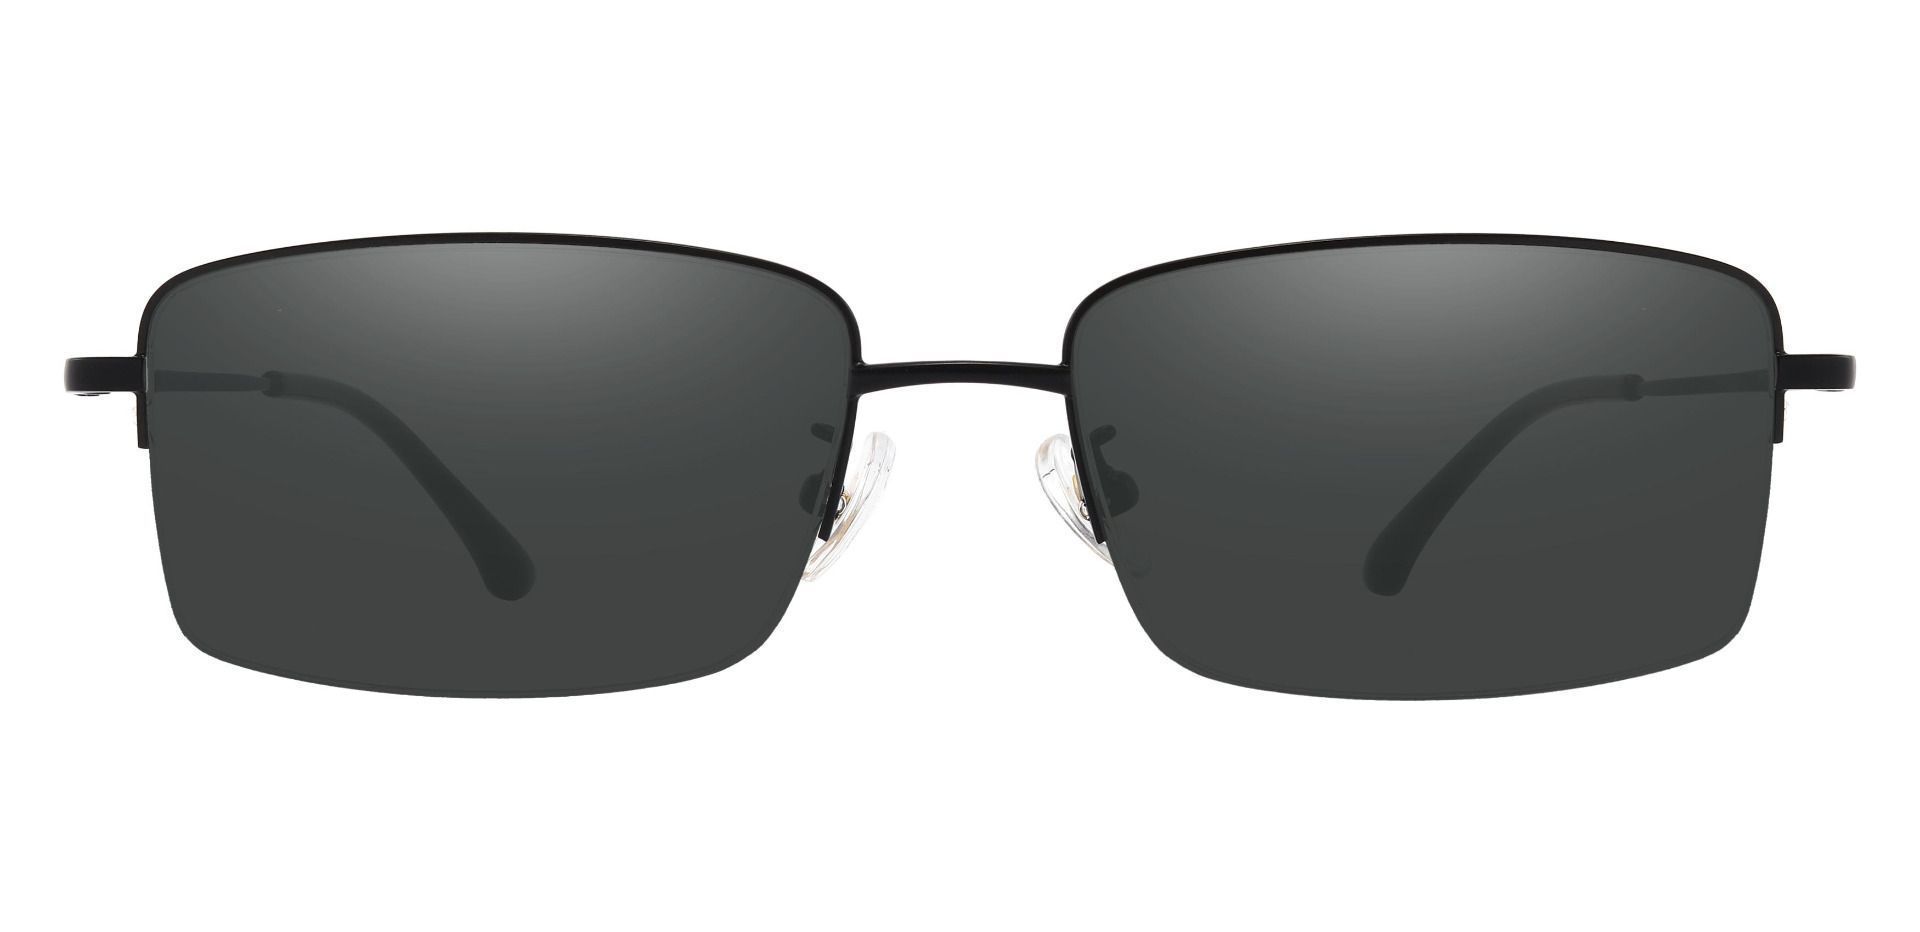 Bellmont Rectangle Reading Sunglasses - Black Frame With Gray Lenses